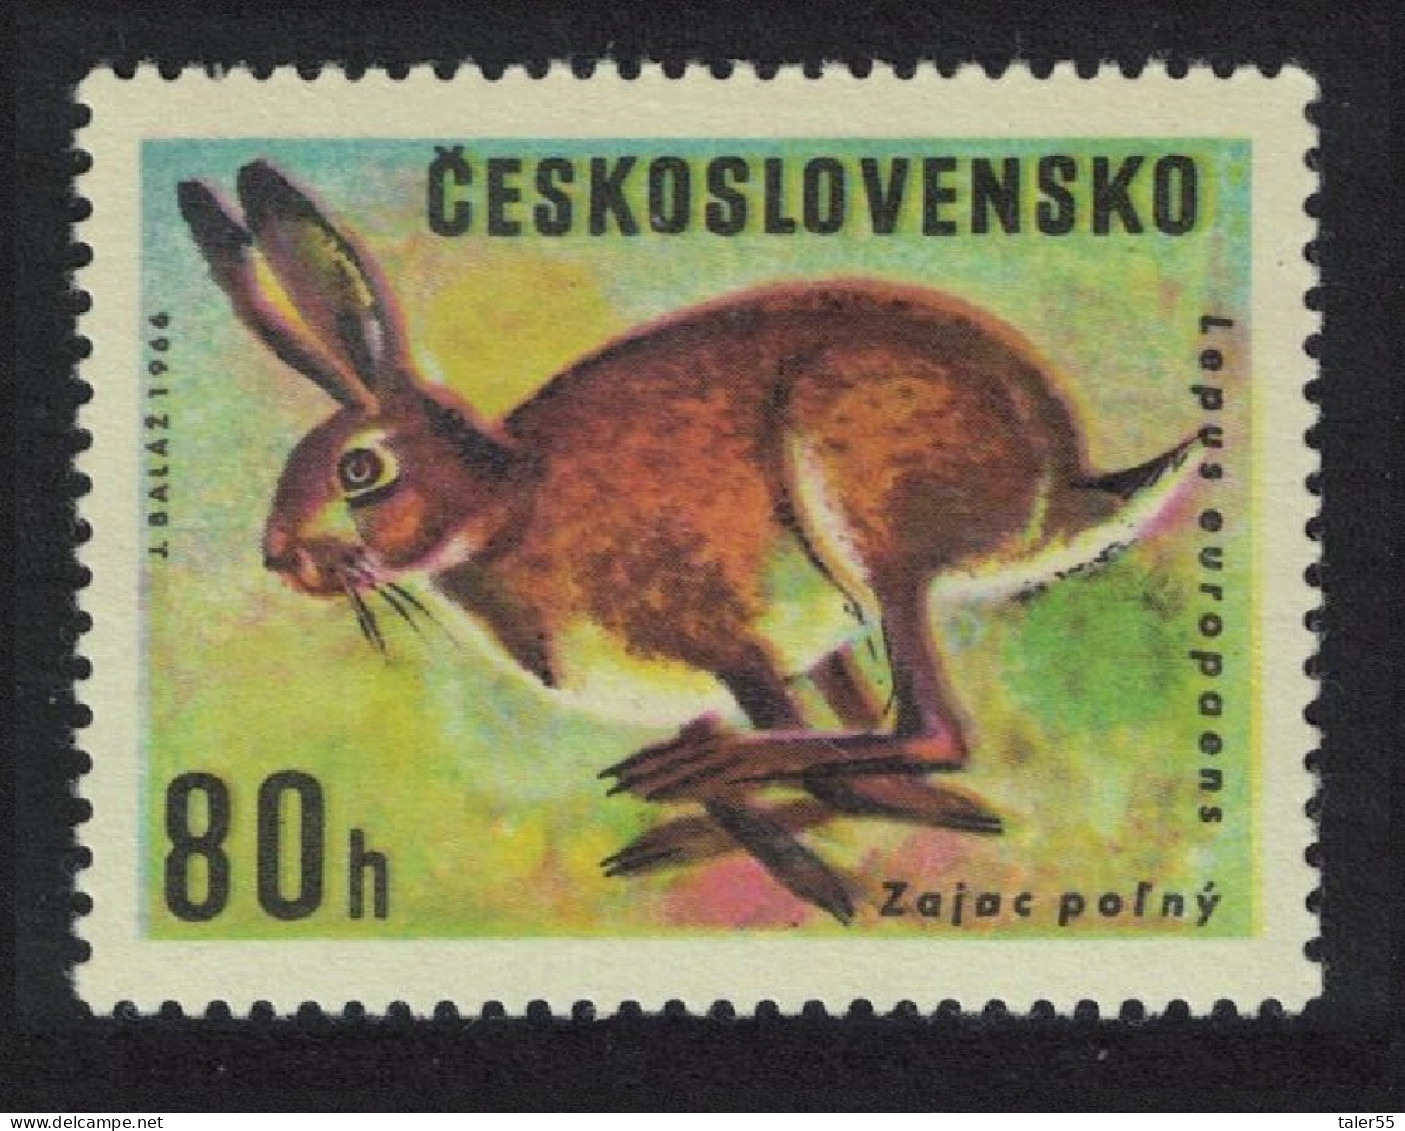 Czechoslovakia Brown Hare Game Animals 1966 MNH SG#1615 - Nuovi